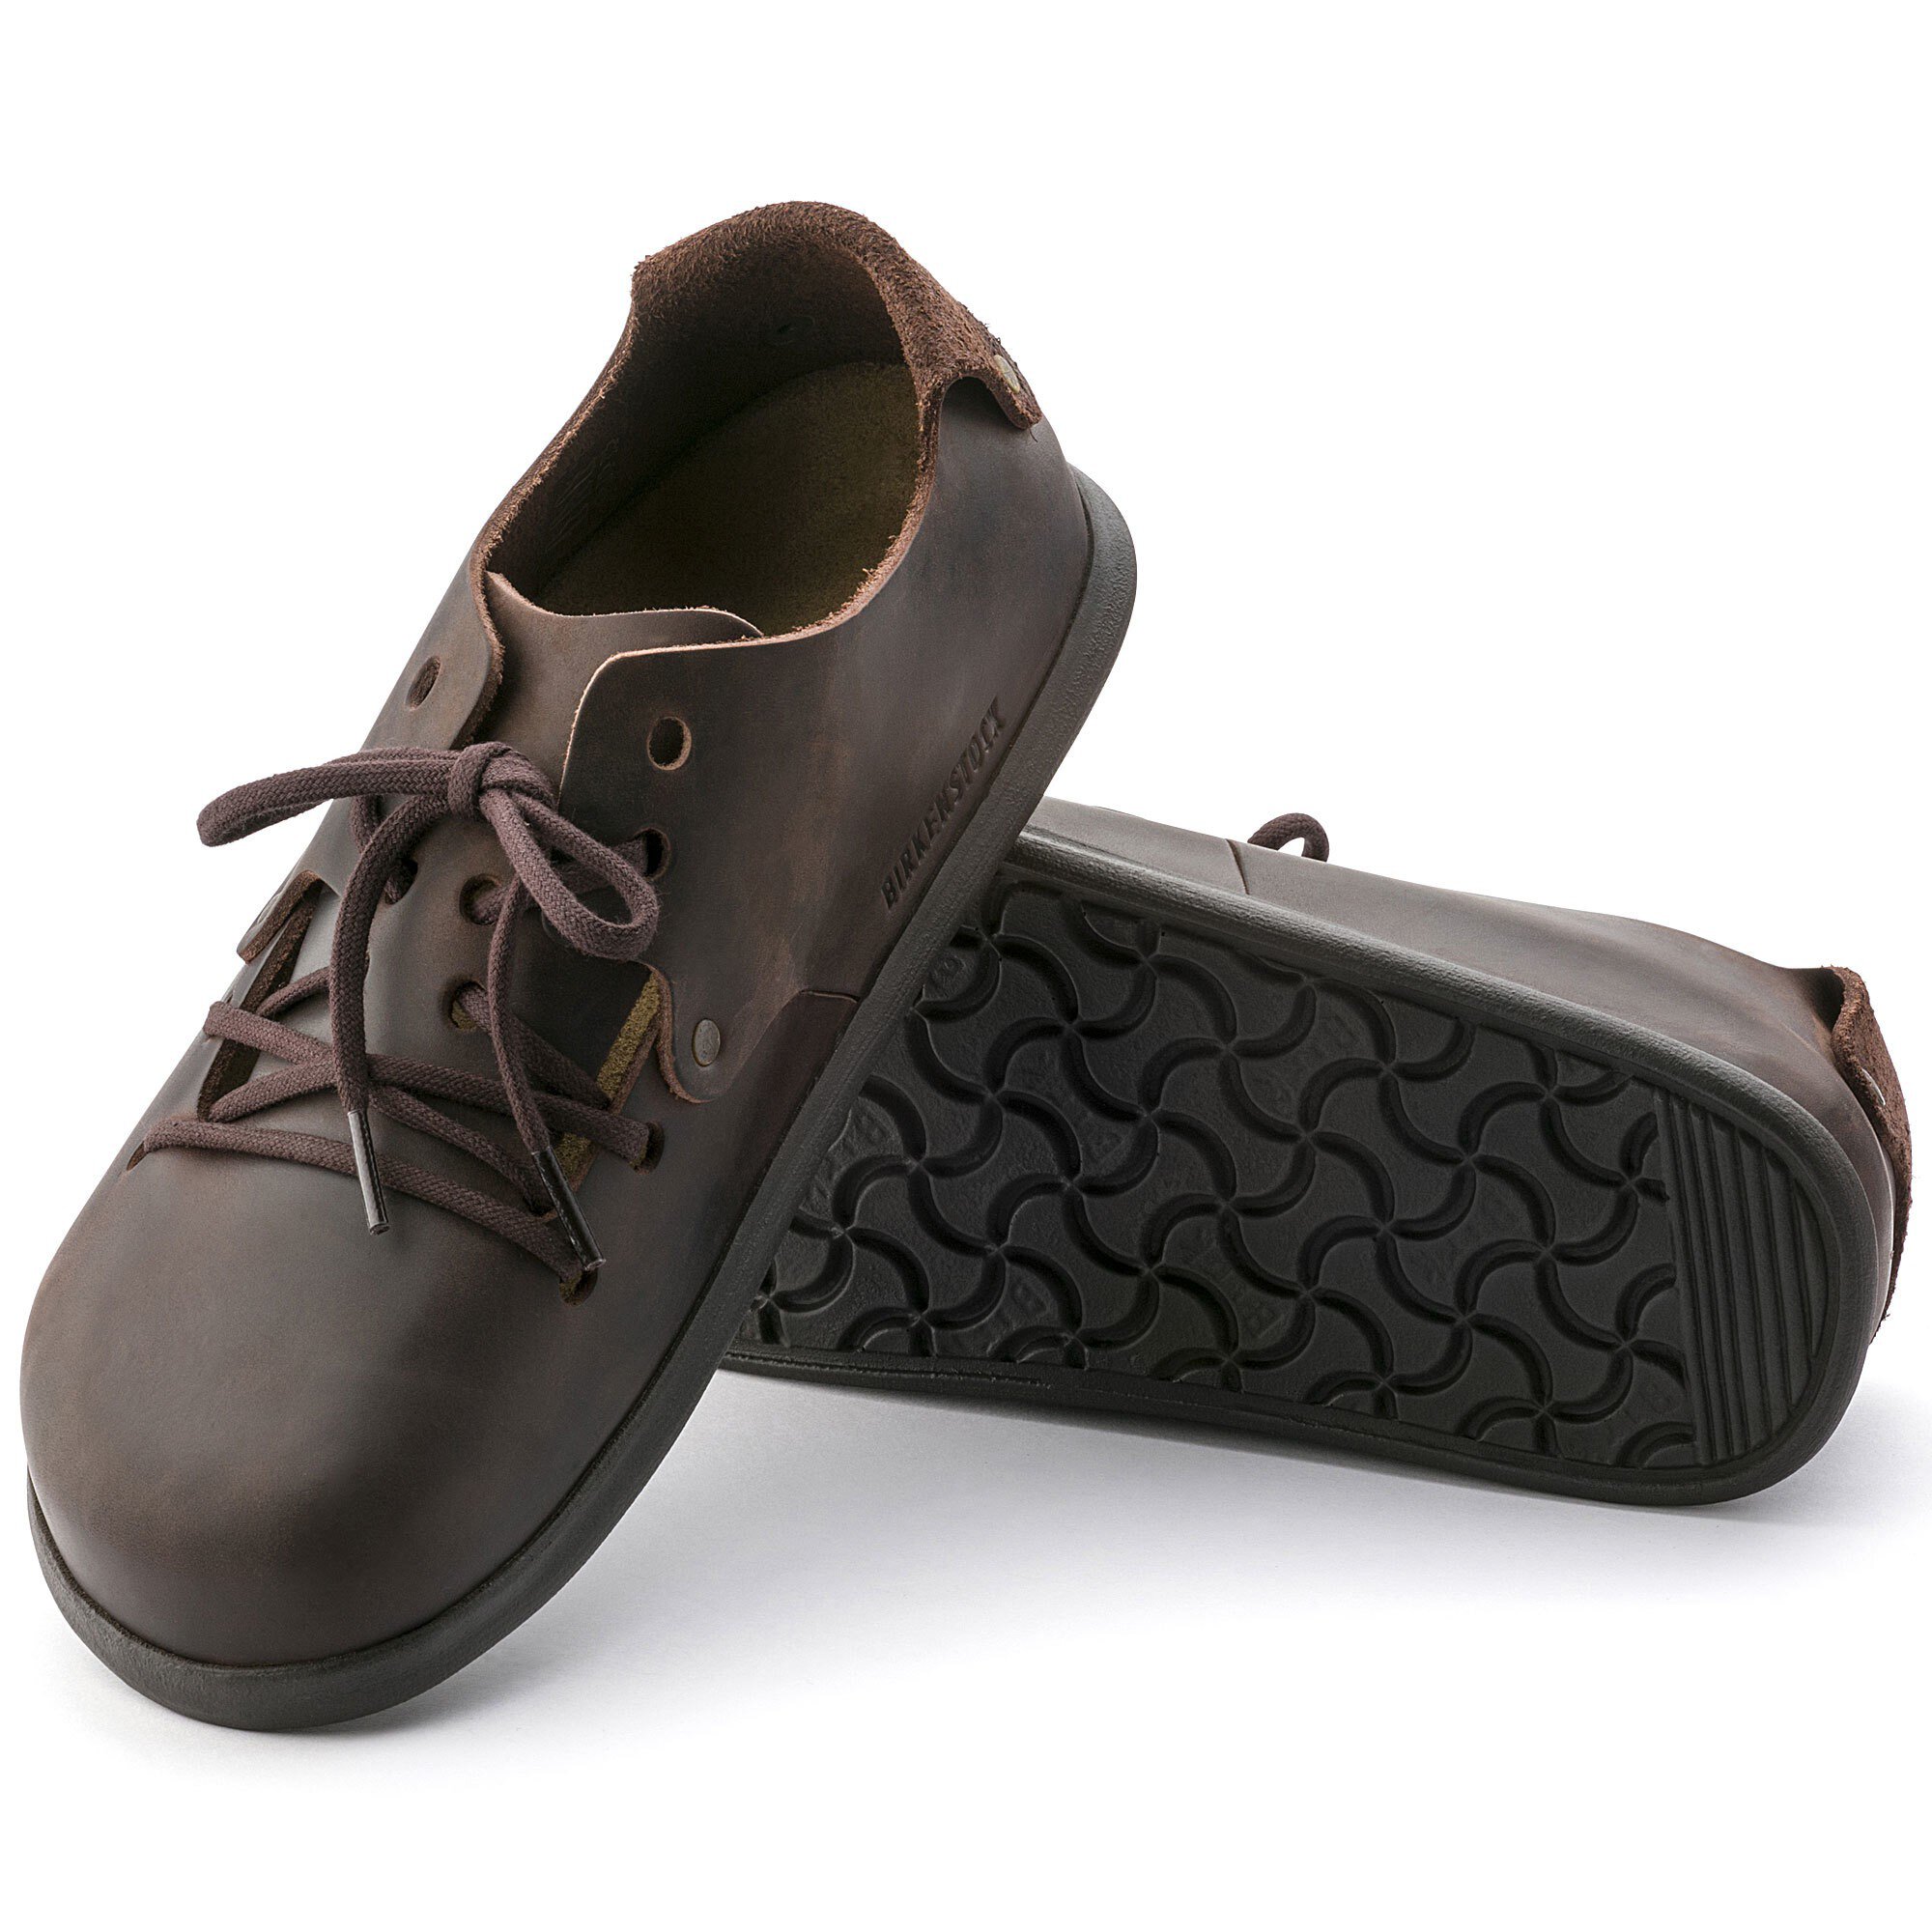 birkenstock leather shoes